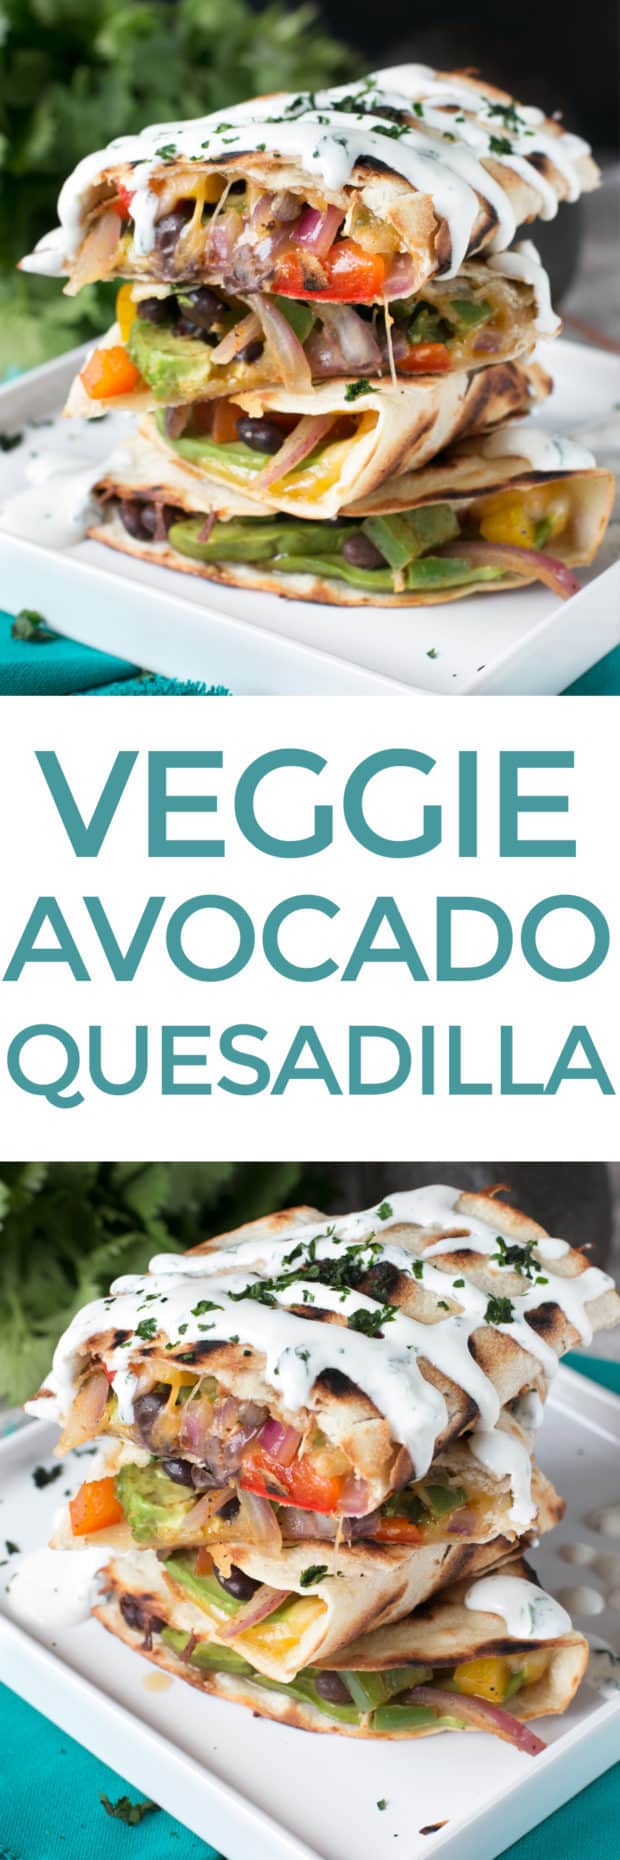 Veggie Avocado Quesadilla with Cilantro Crema - Cake 'n Knife